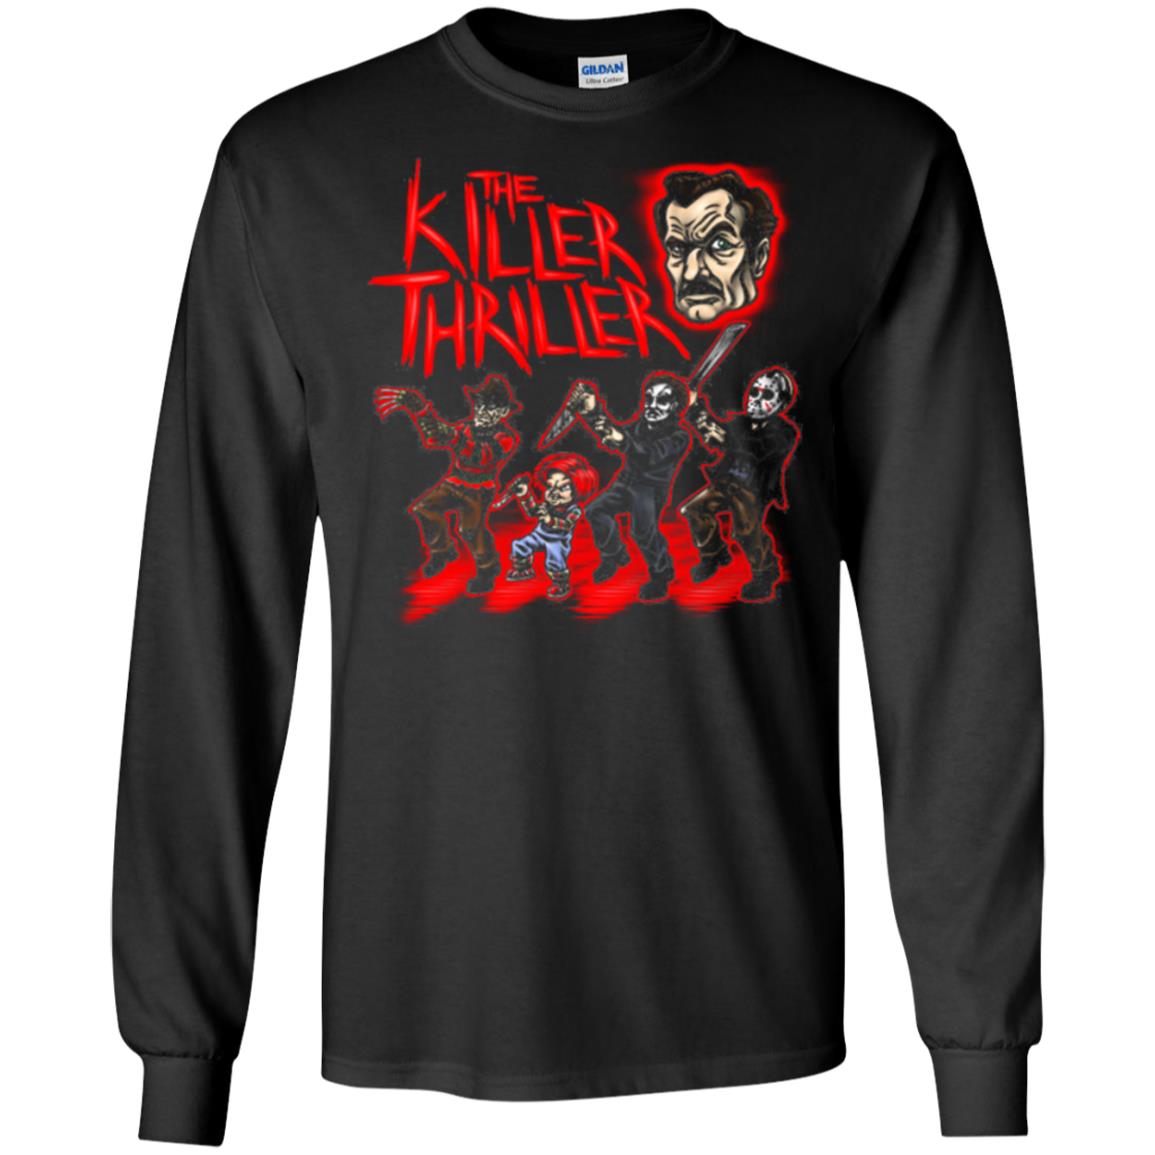 The Killer Thriller Halloween Gift Tee T Shirt